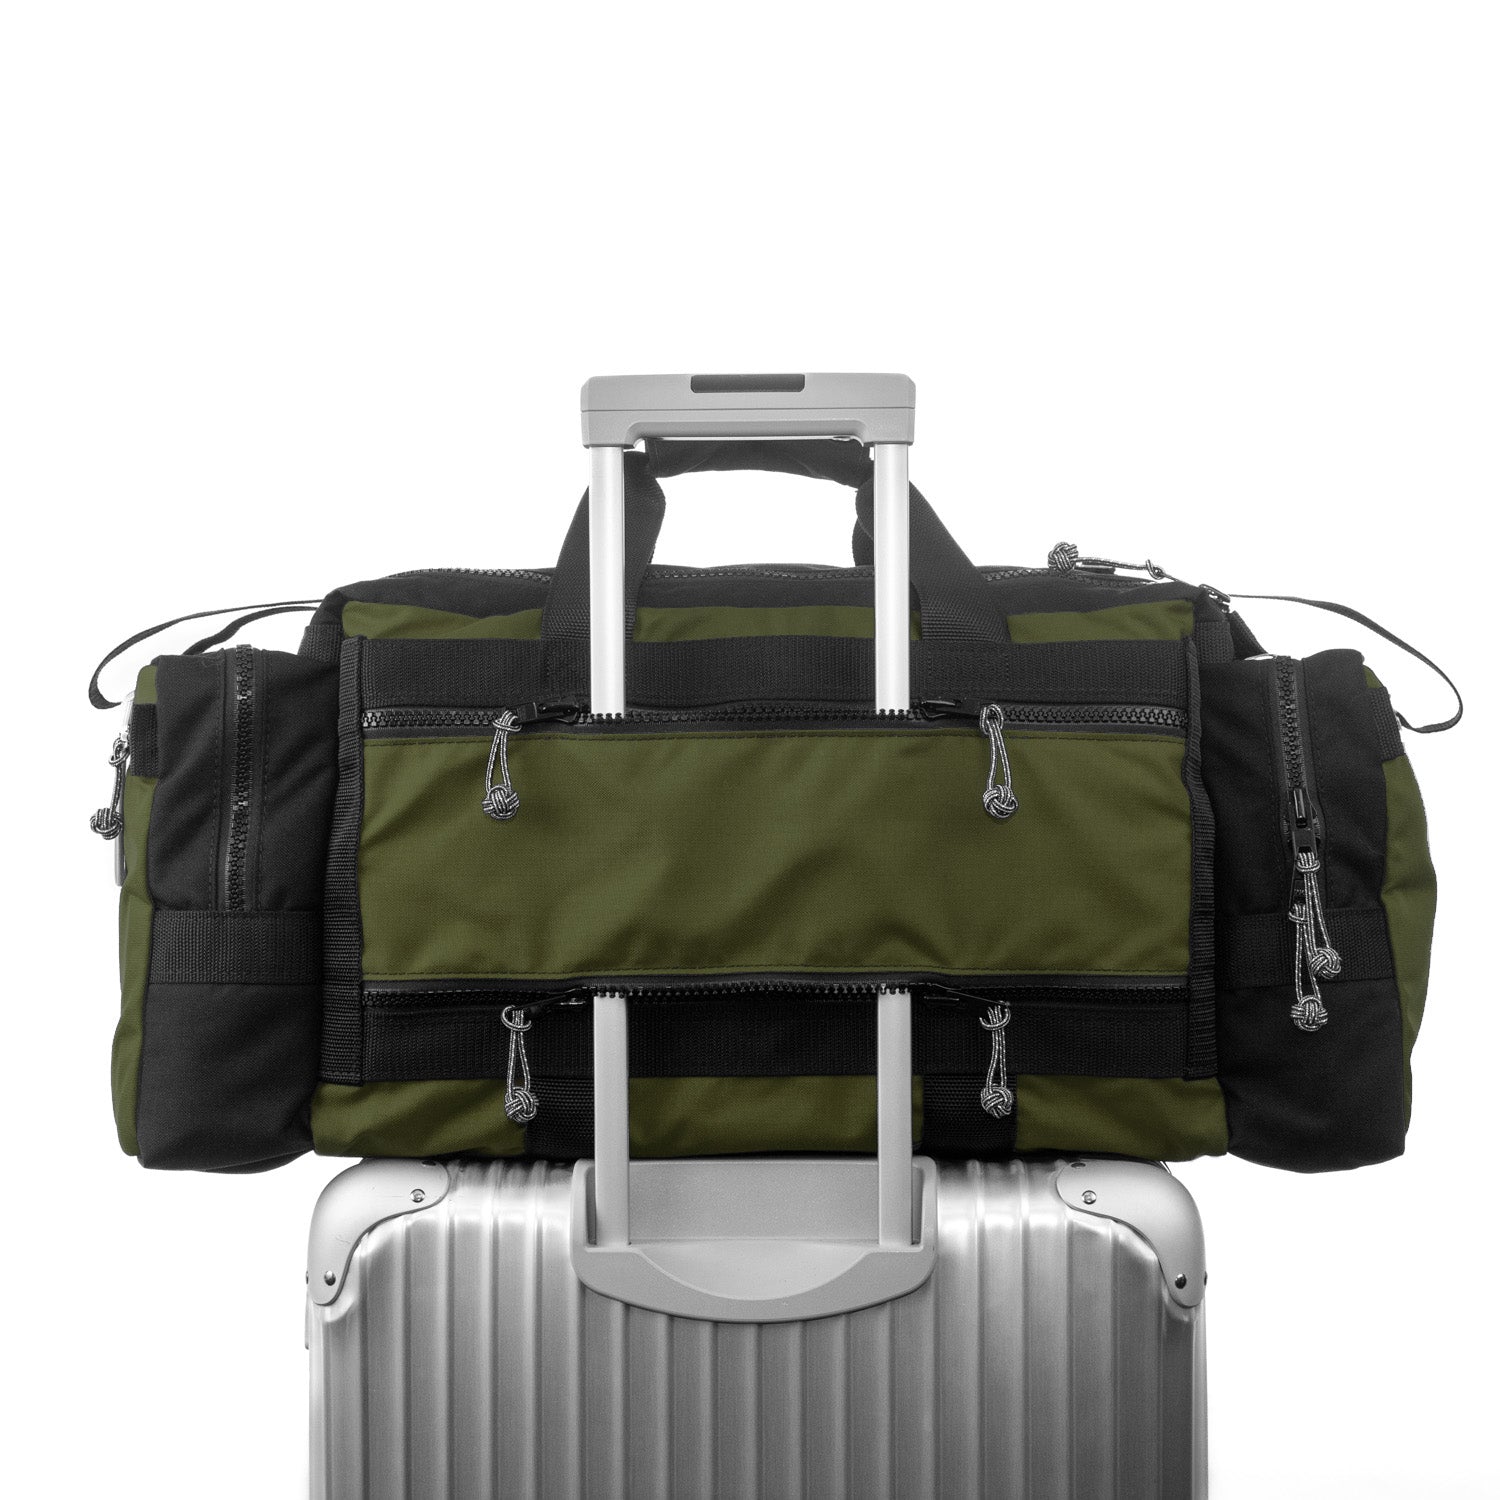 Pass thru pocket and bag on wheeled suitcase. 